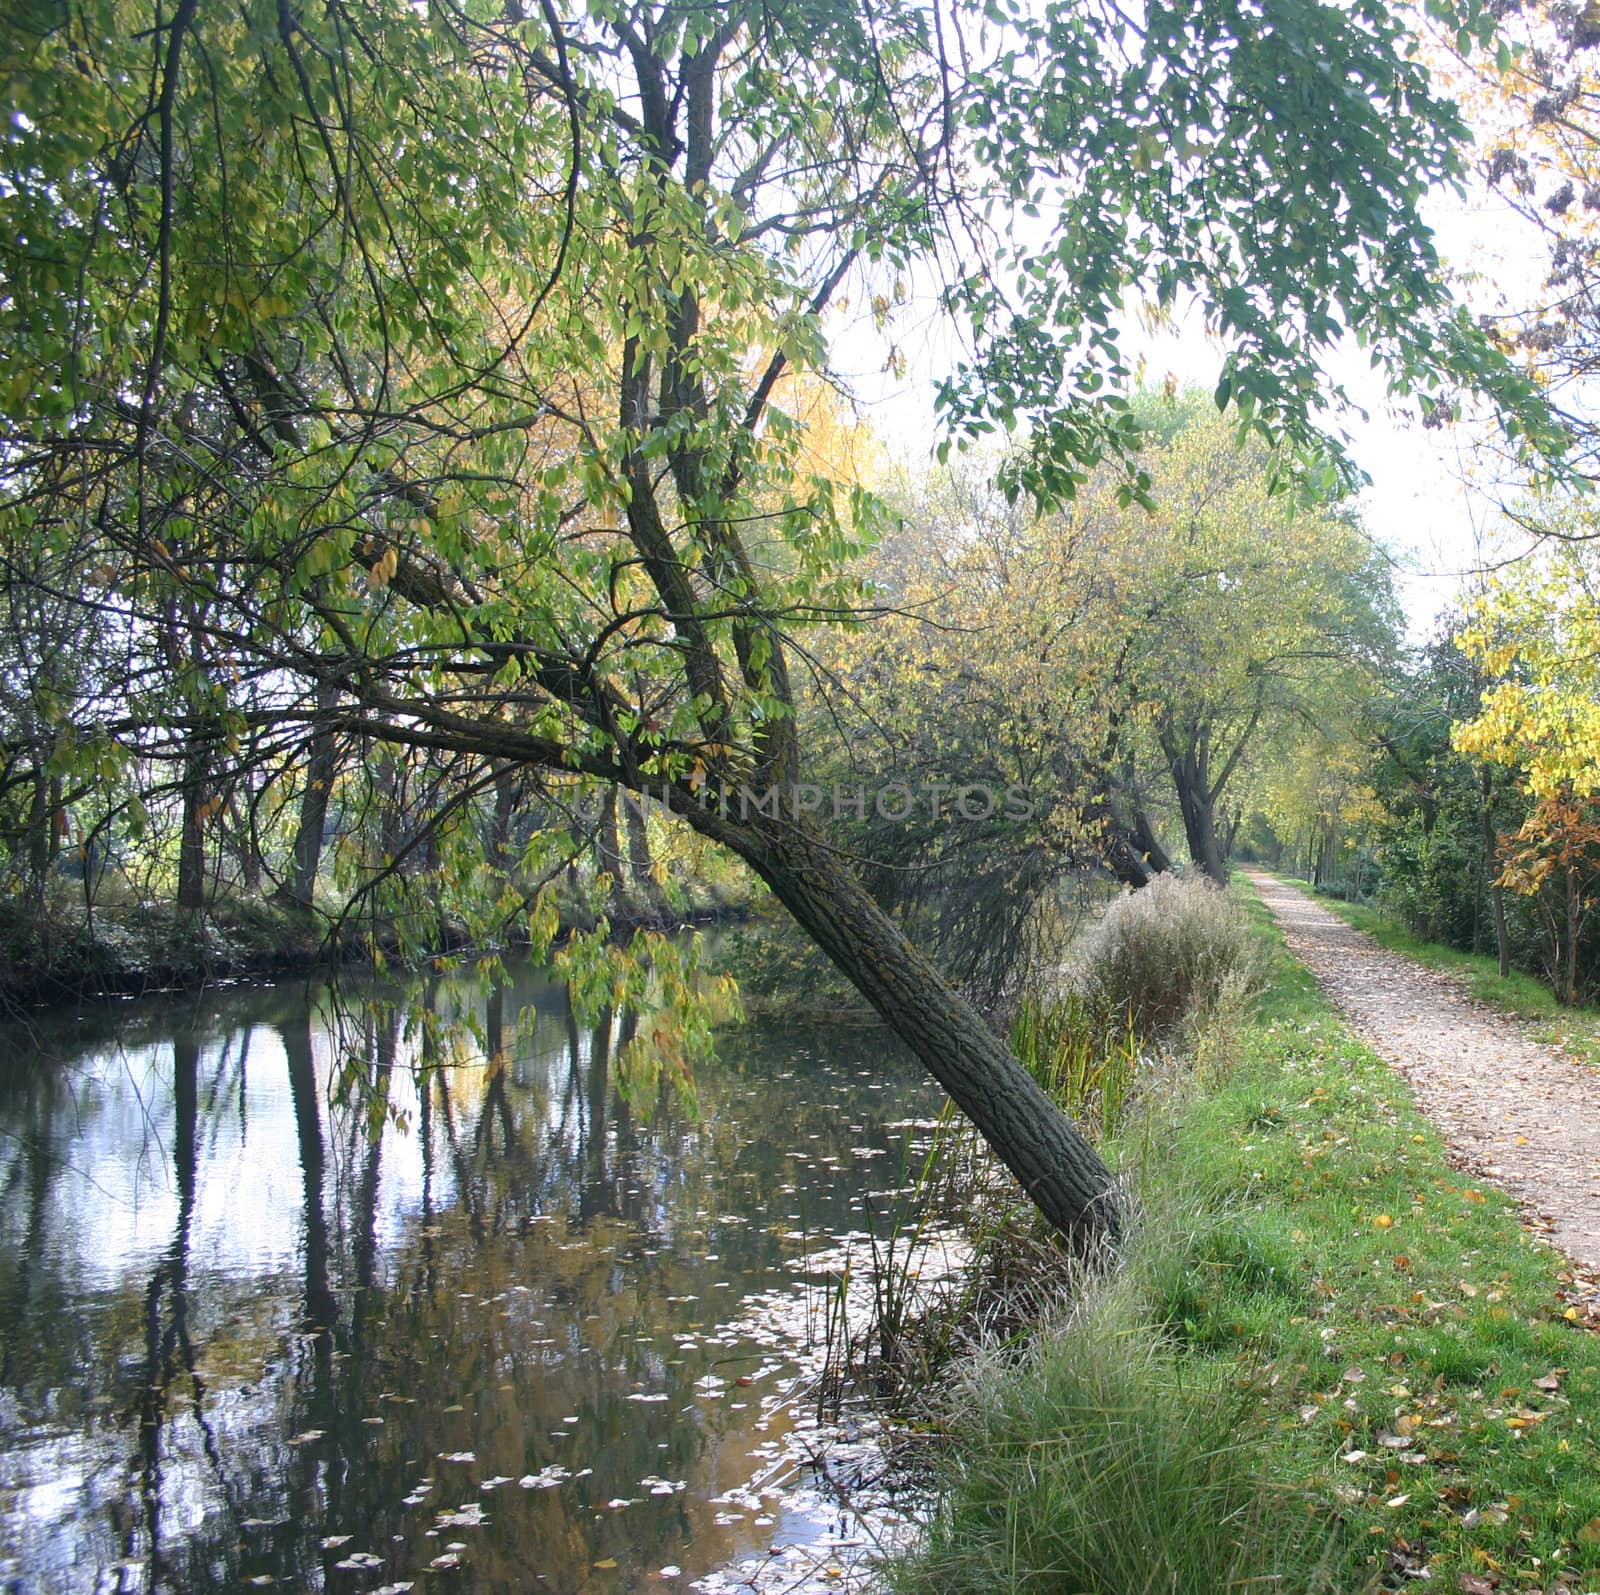 Footh path alongside the canal de Castilla, Palencia, Spain